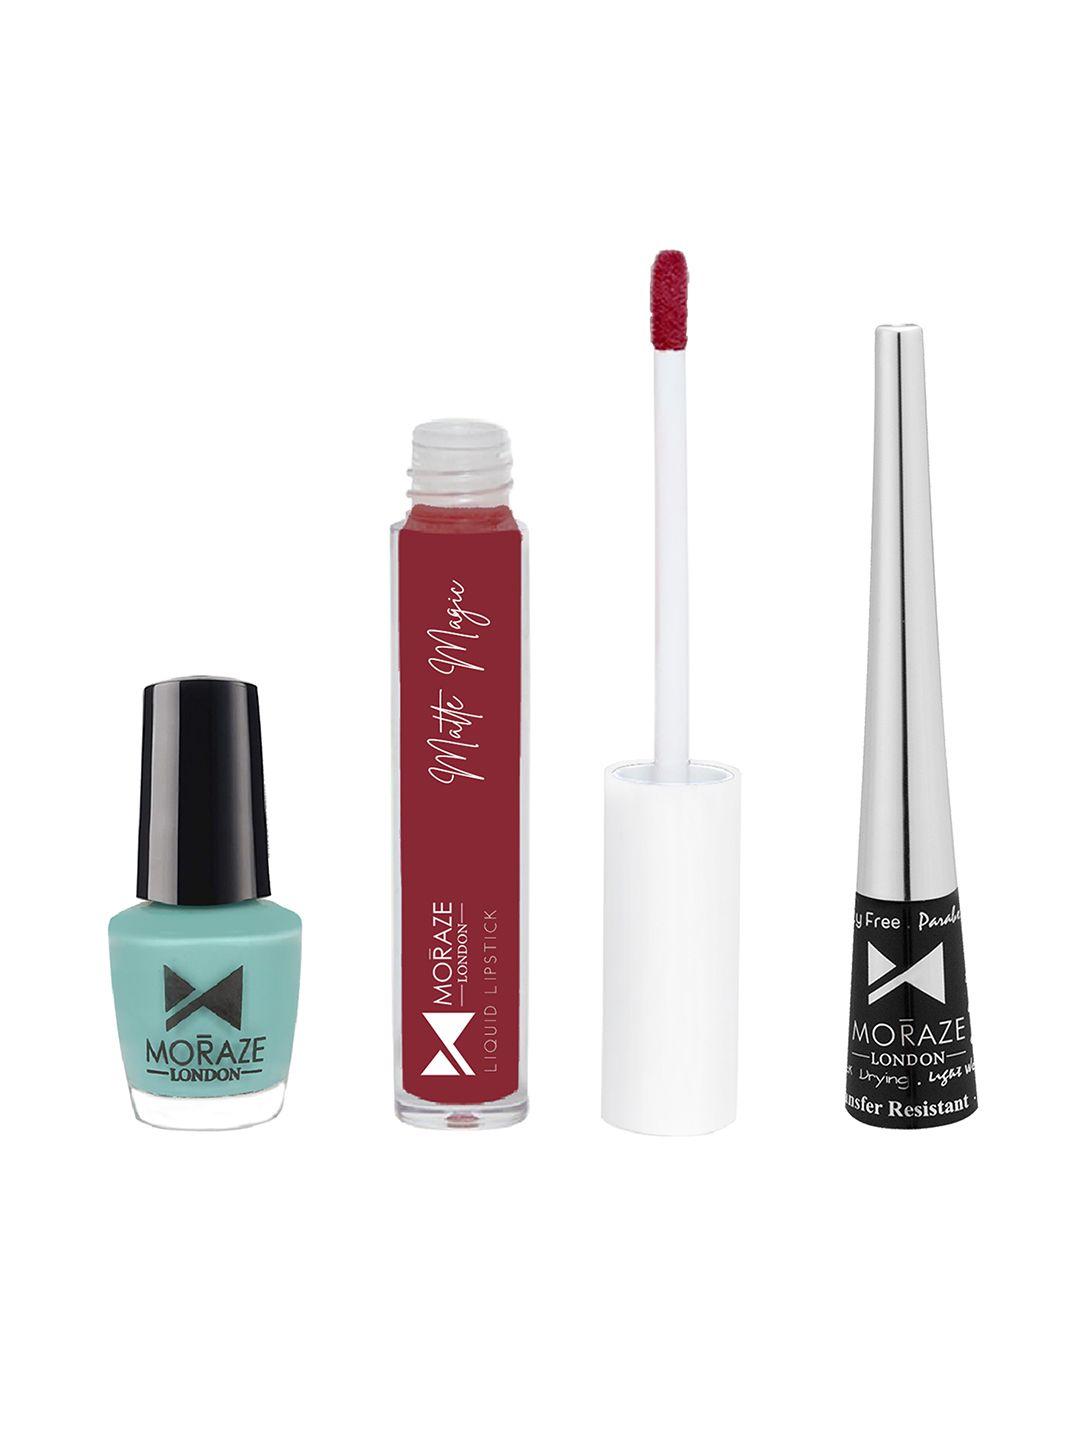 moraze combo pack of nail polish (aquamarine), eyeliner, & liquid lipstick (no regret)